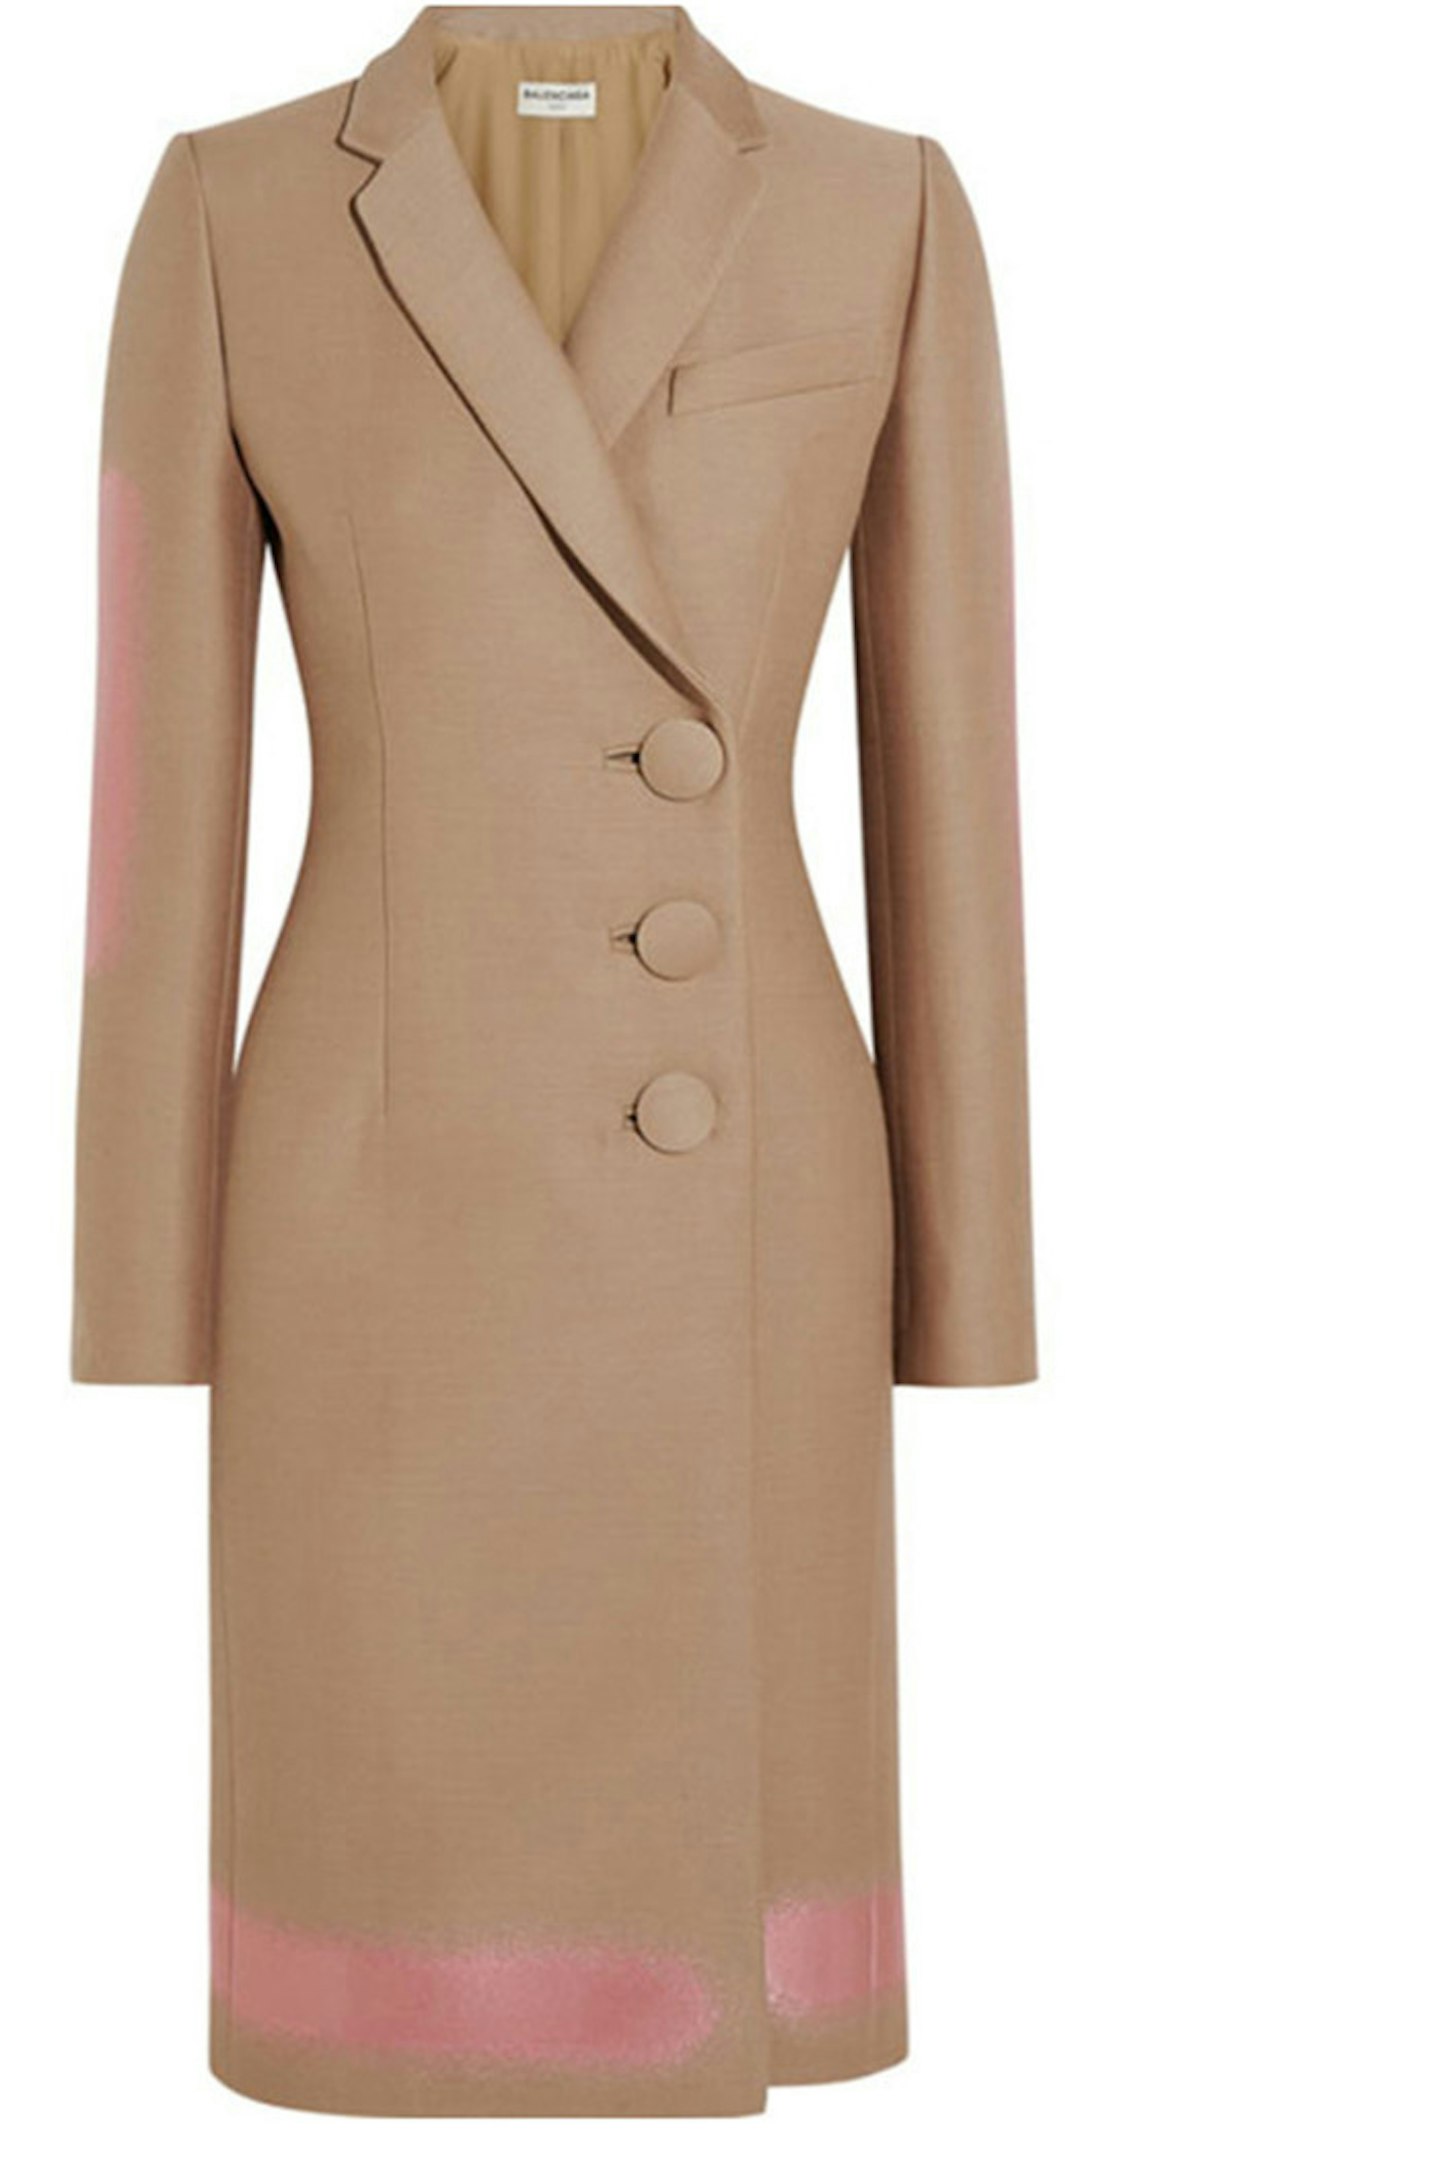 Balenciage Camel Coat, £2,010.00